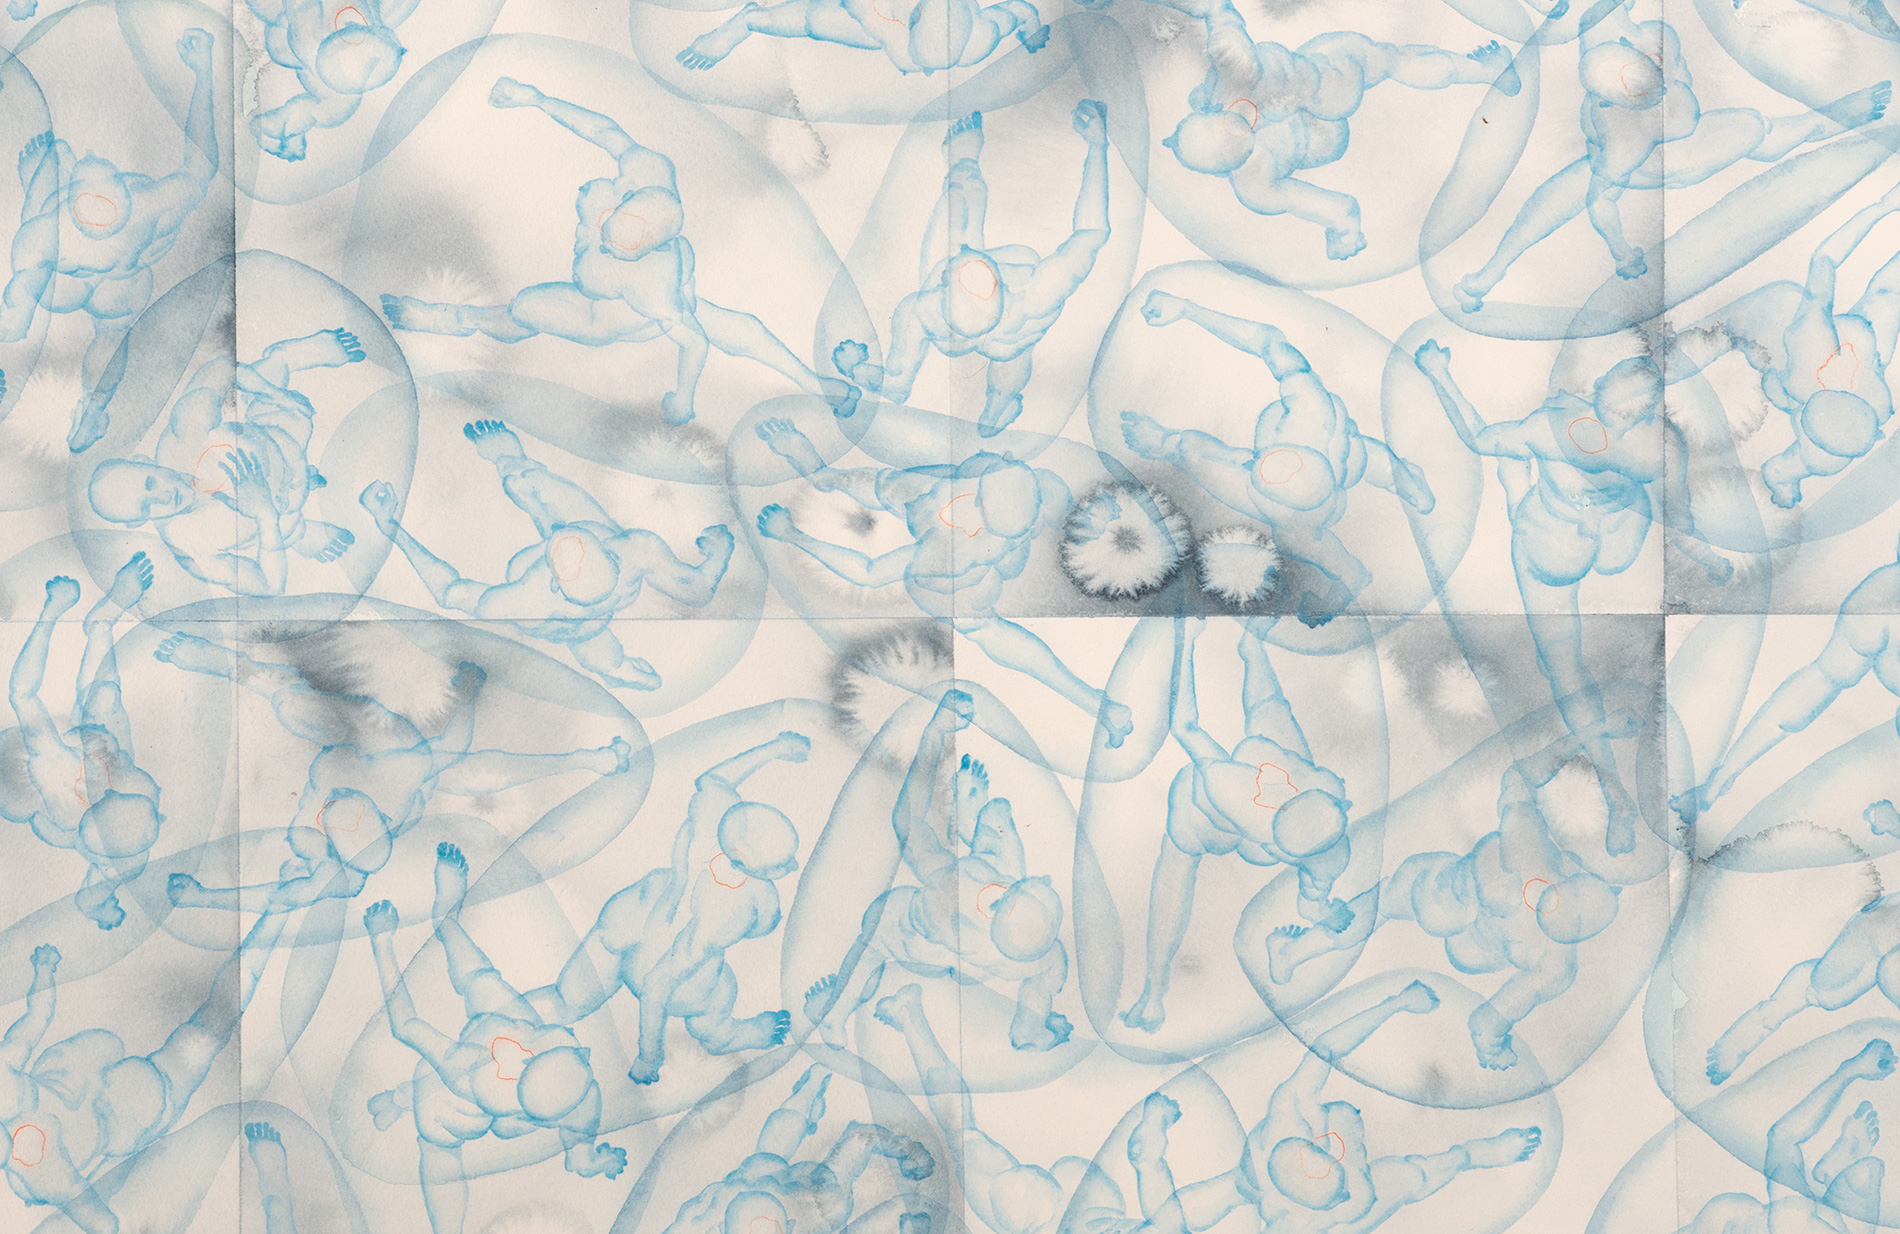 Stefano Bonzano, Reazioni biologiche, watercolor on paper applied on two panels, 110x73 cm, 2019 (detail).